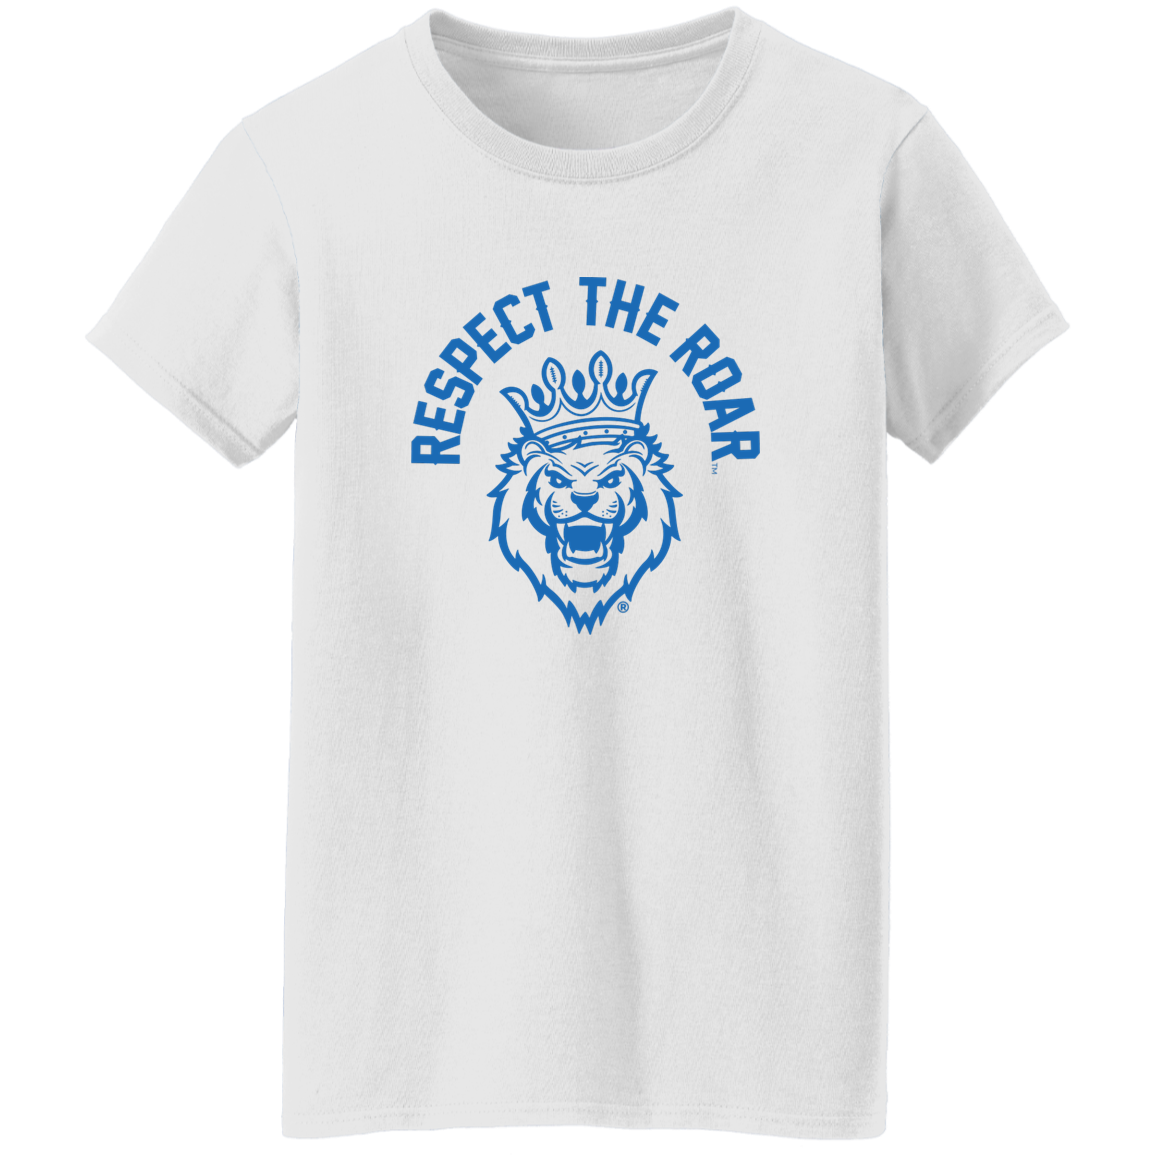 Respect The Roar® Ladies' T-Shirt